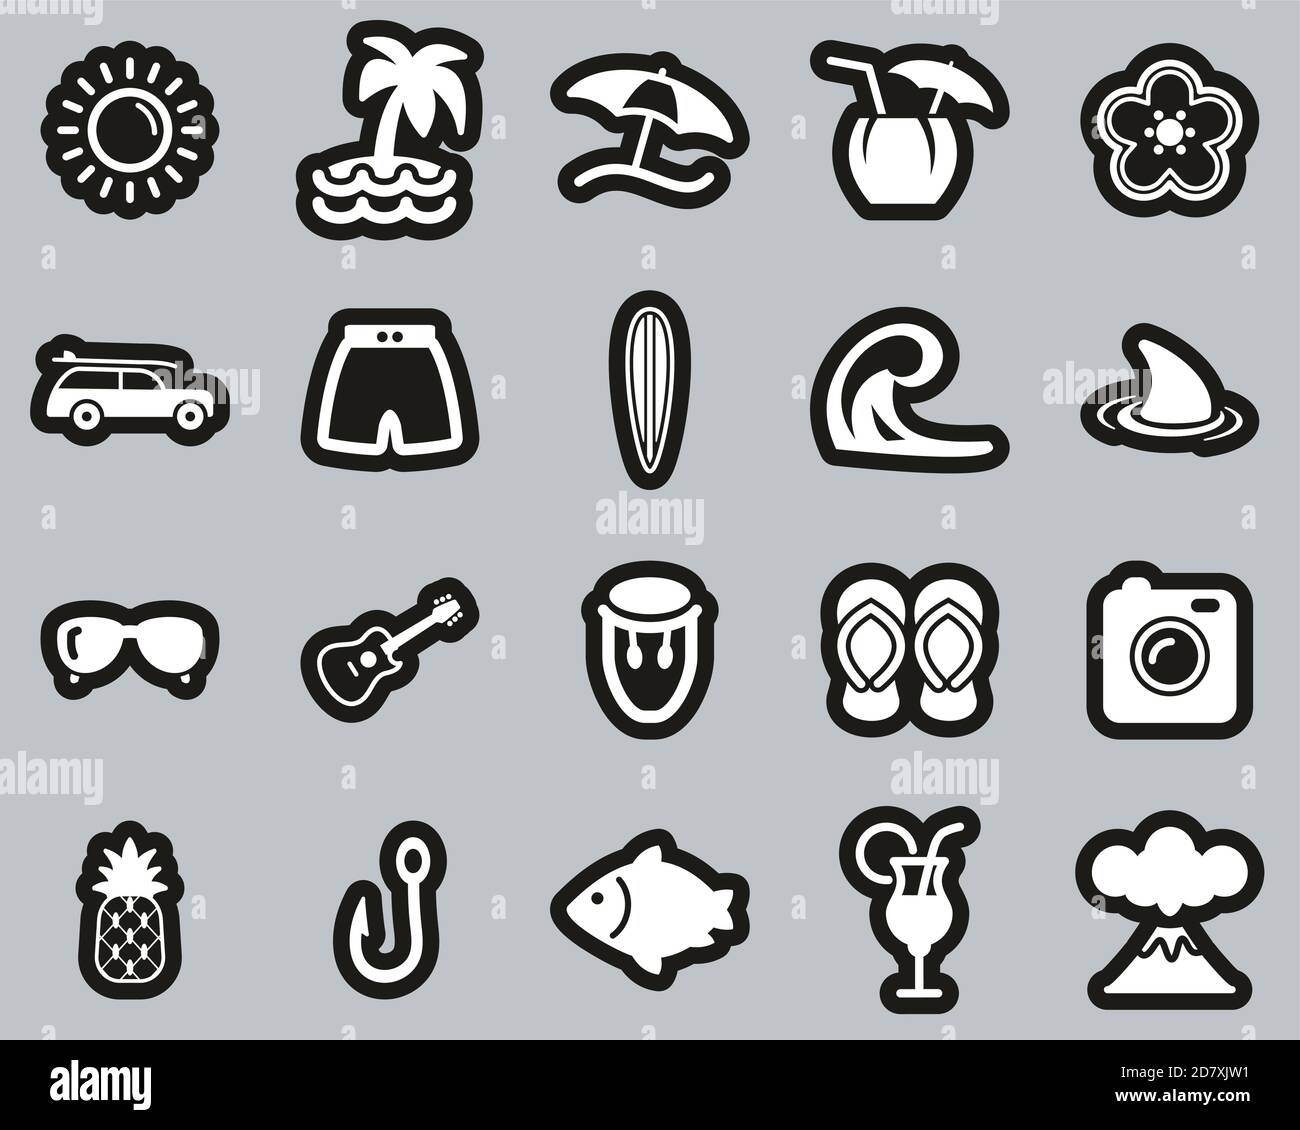 https://c8.alamy.com/comp/2D7XJW1/hawaii-culture-lifestyle-icons-white-on-black-sticker-set-big-2D7XJW1.jpg